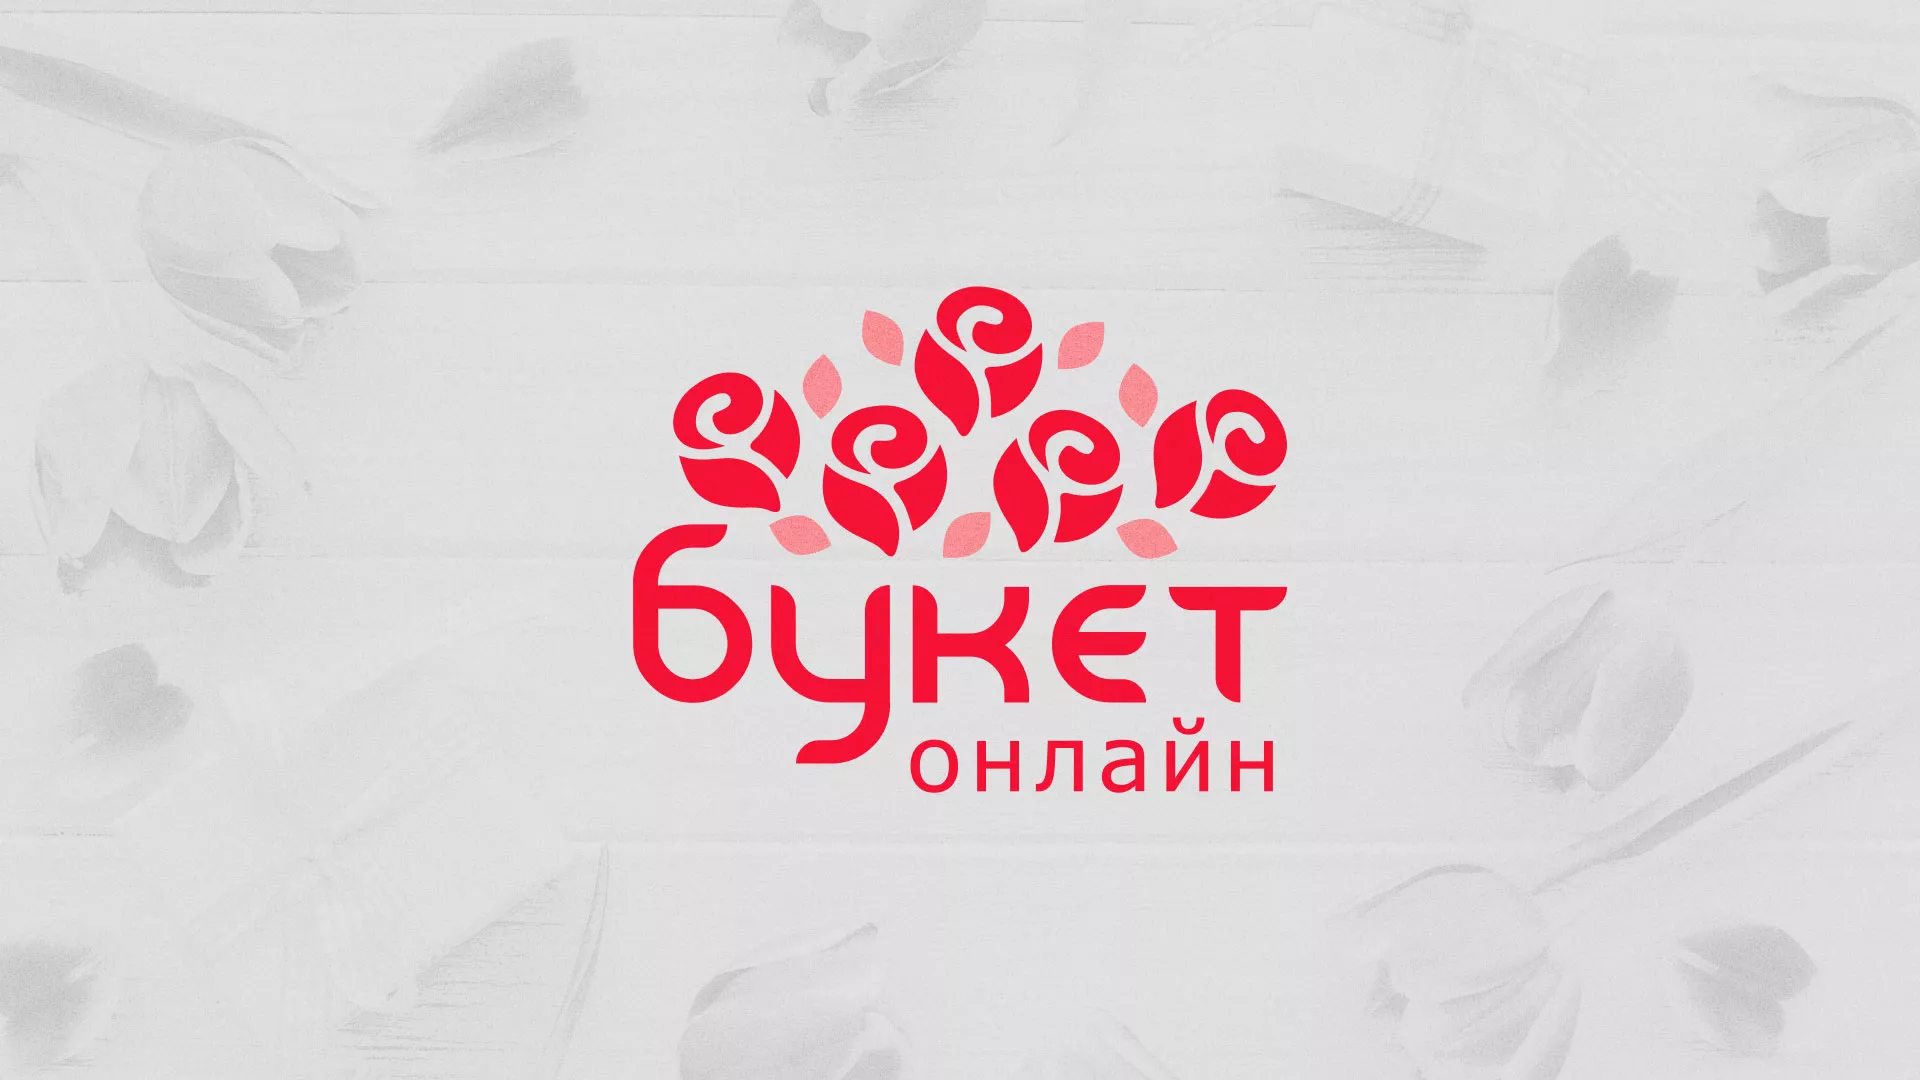 Создание интернет-магазина «Букет-онлайн» по цветам в Каменск-Шахтинске